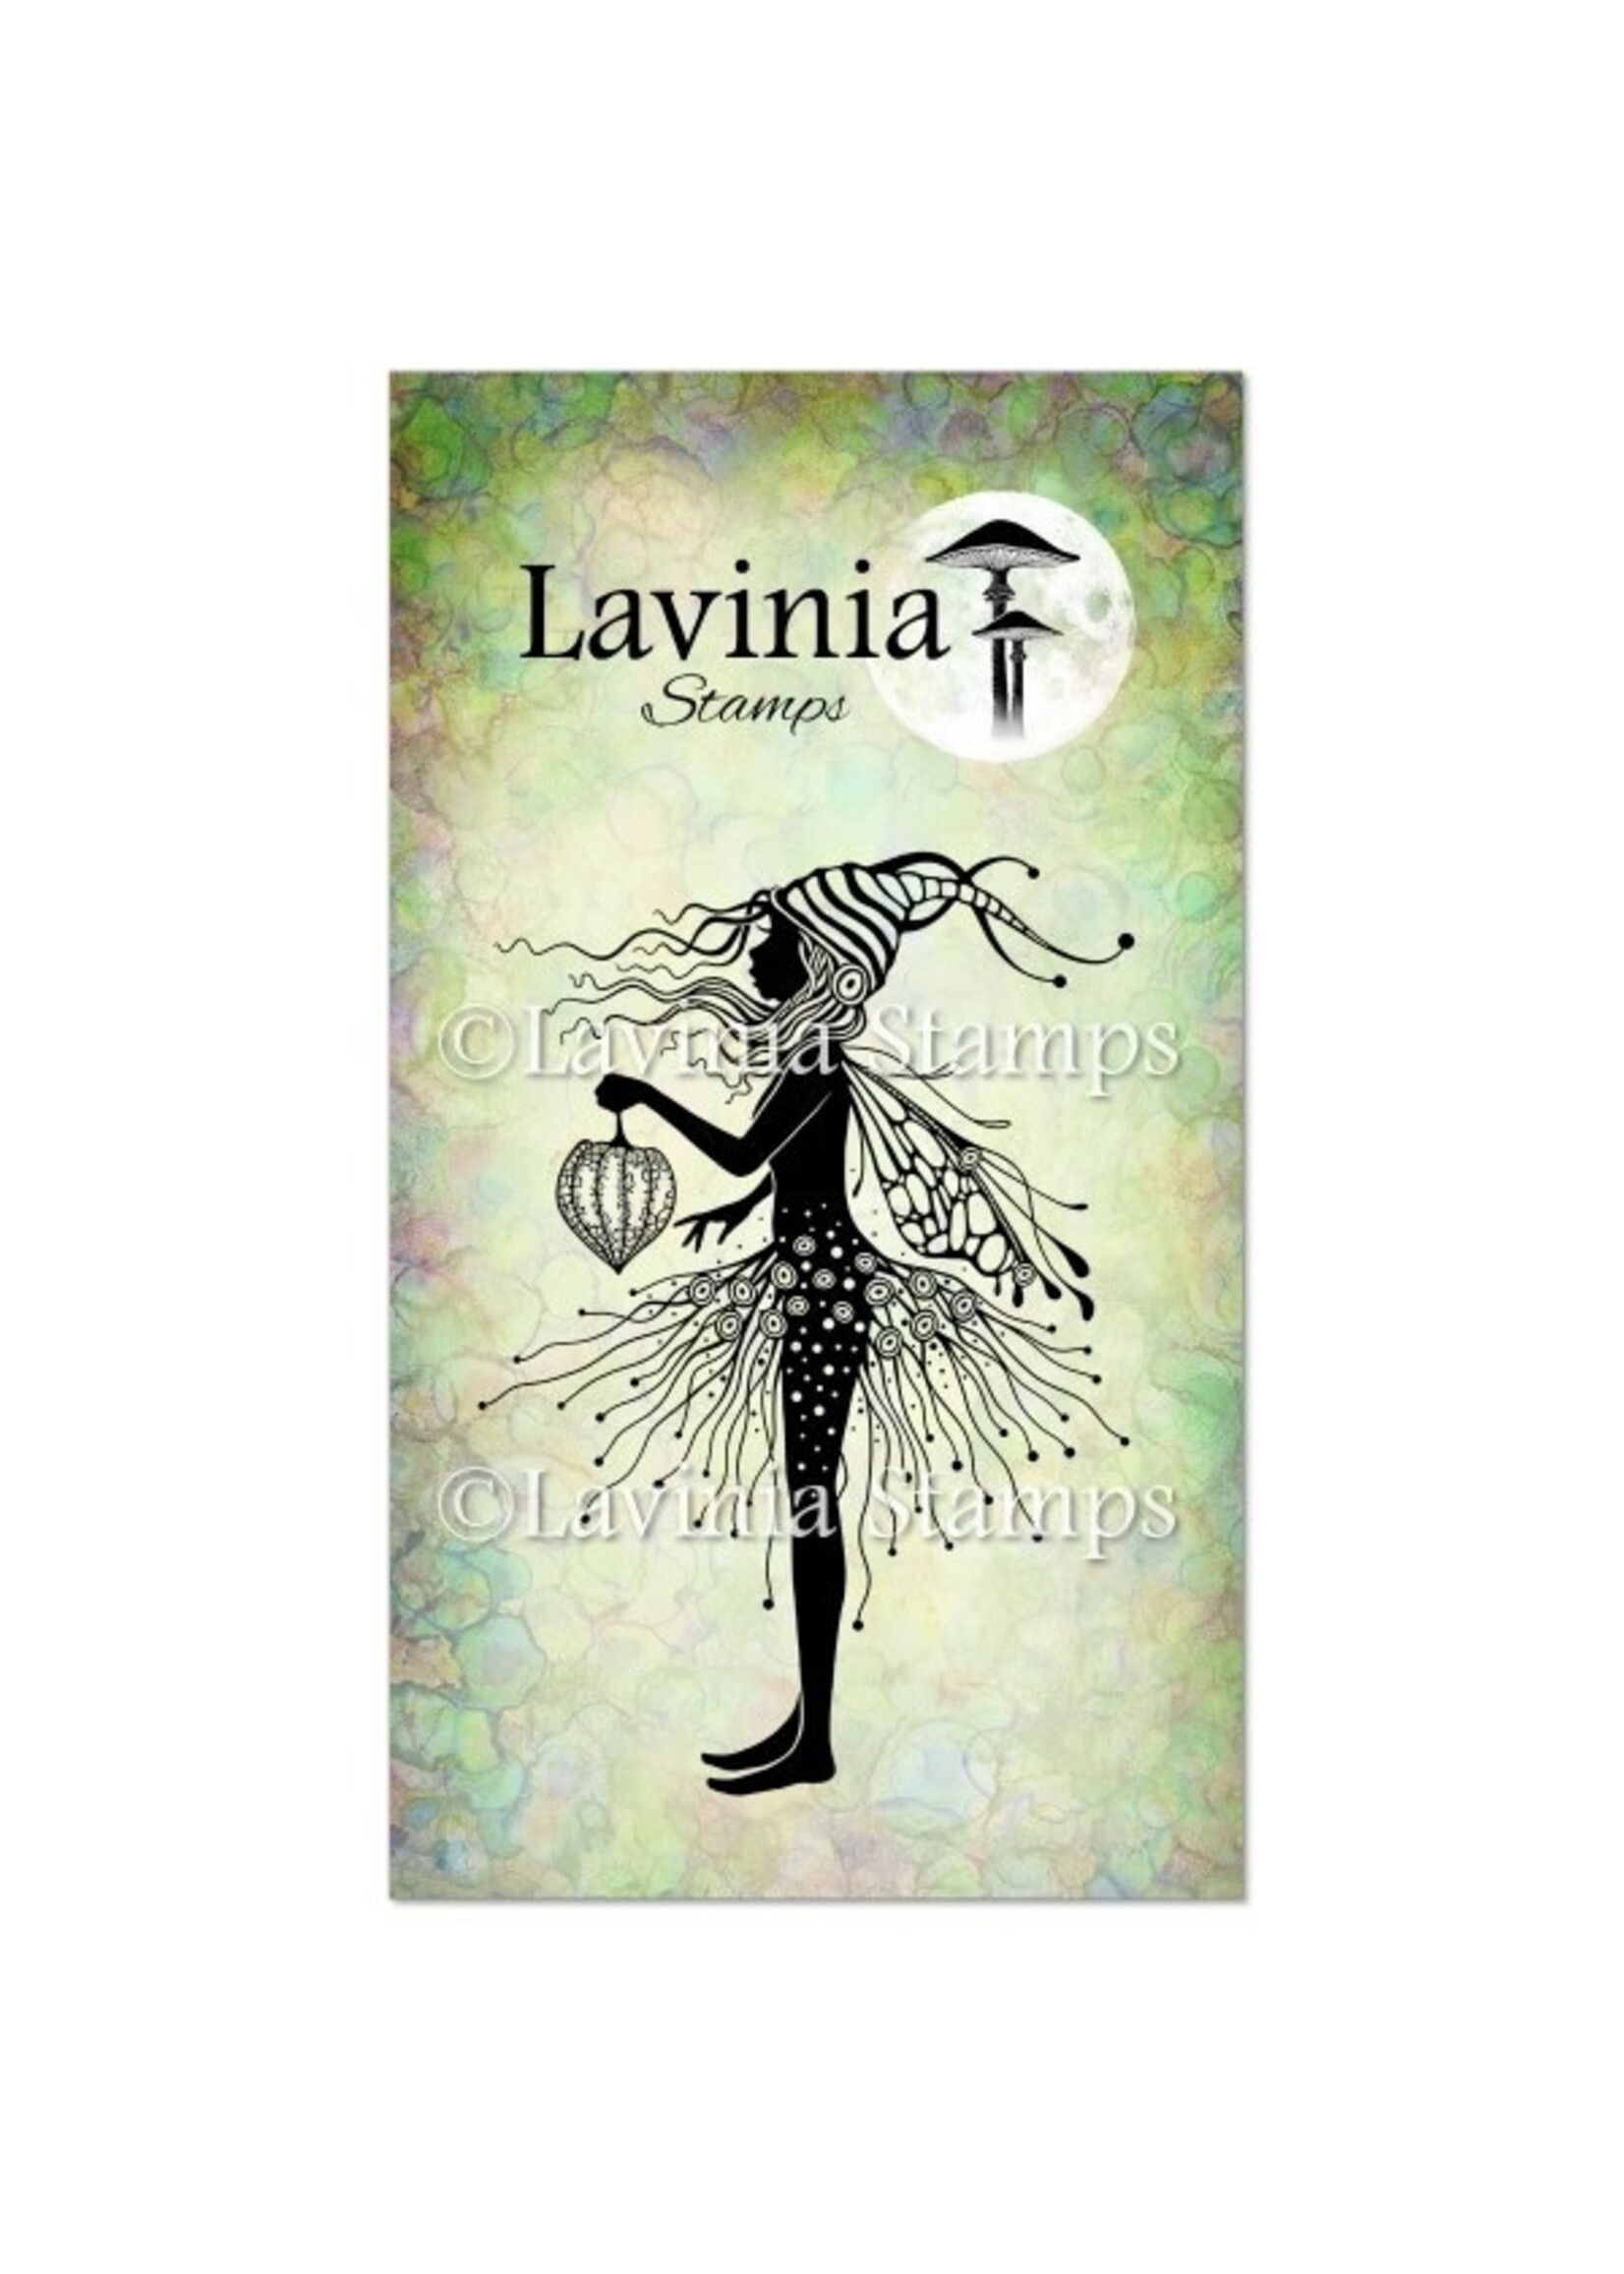 Lavinia Stamp, LAV841 Starr